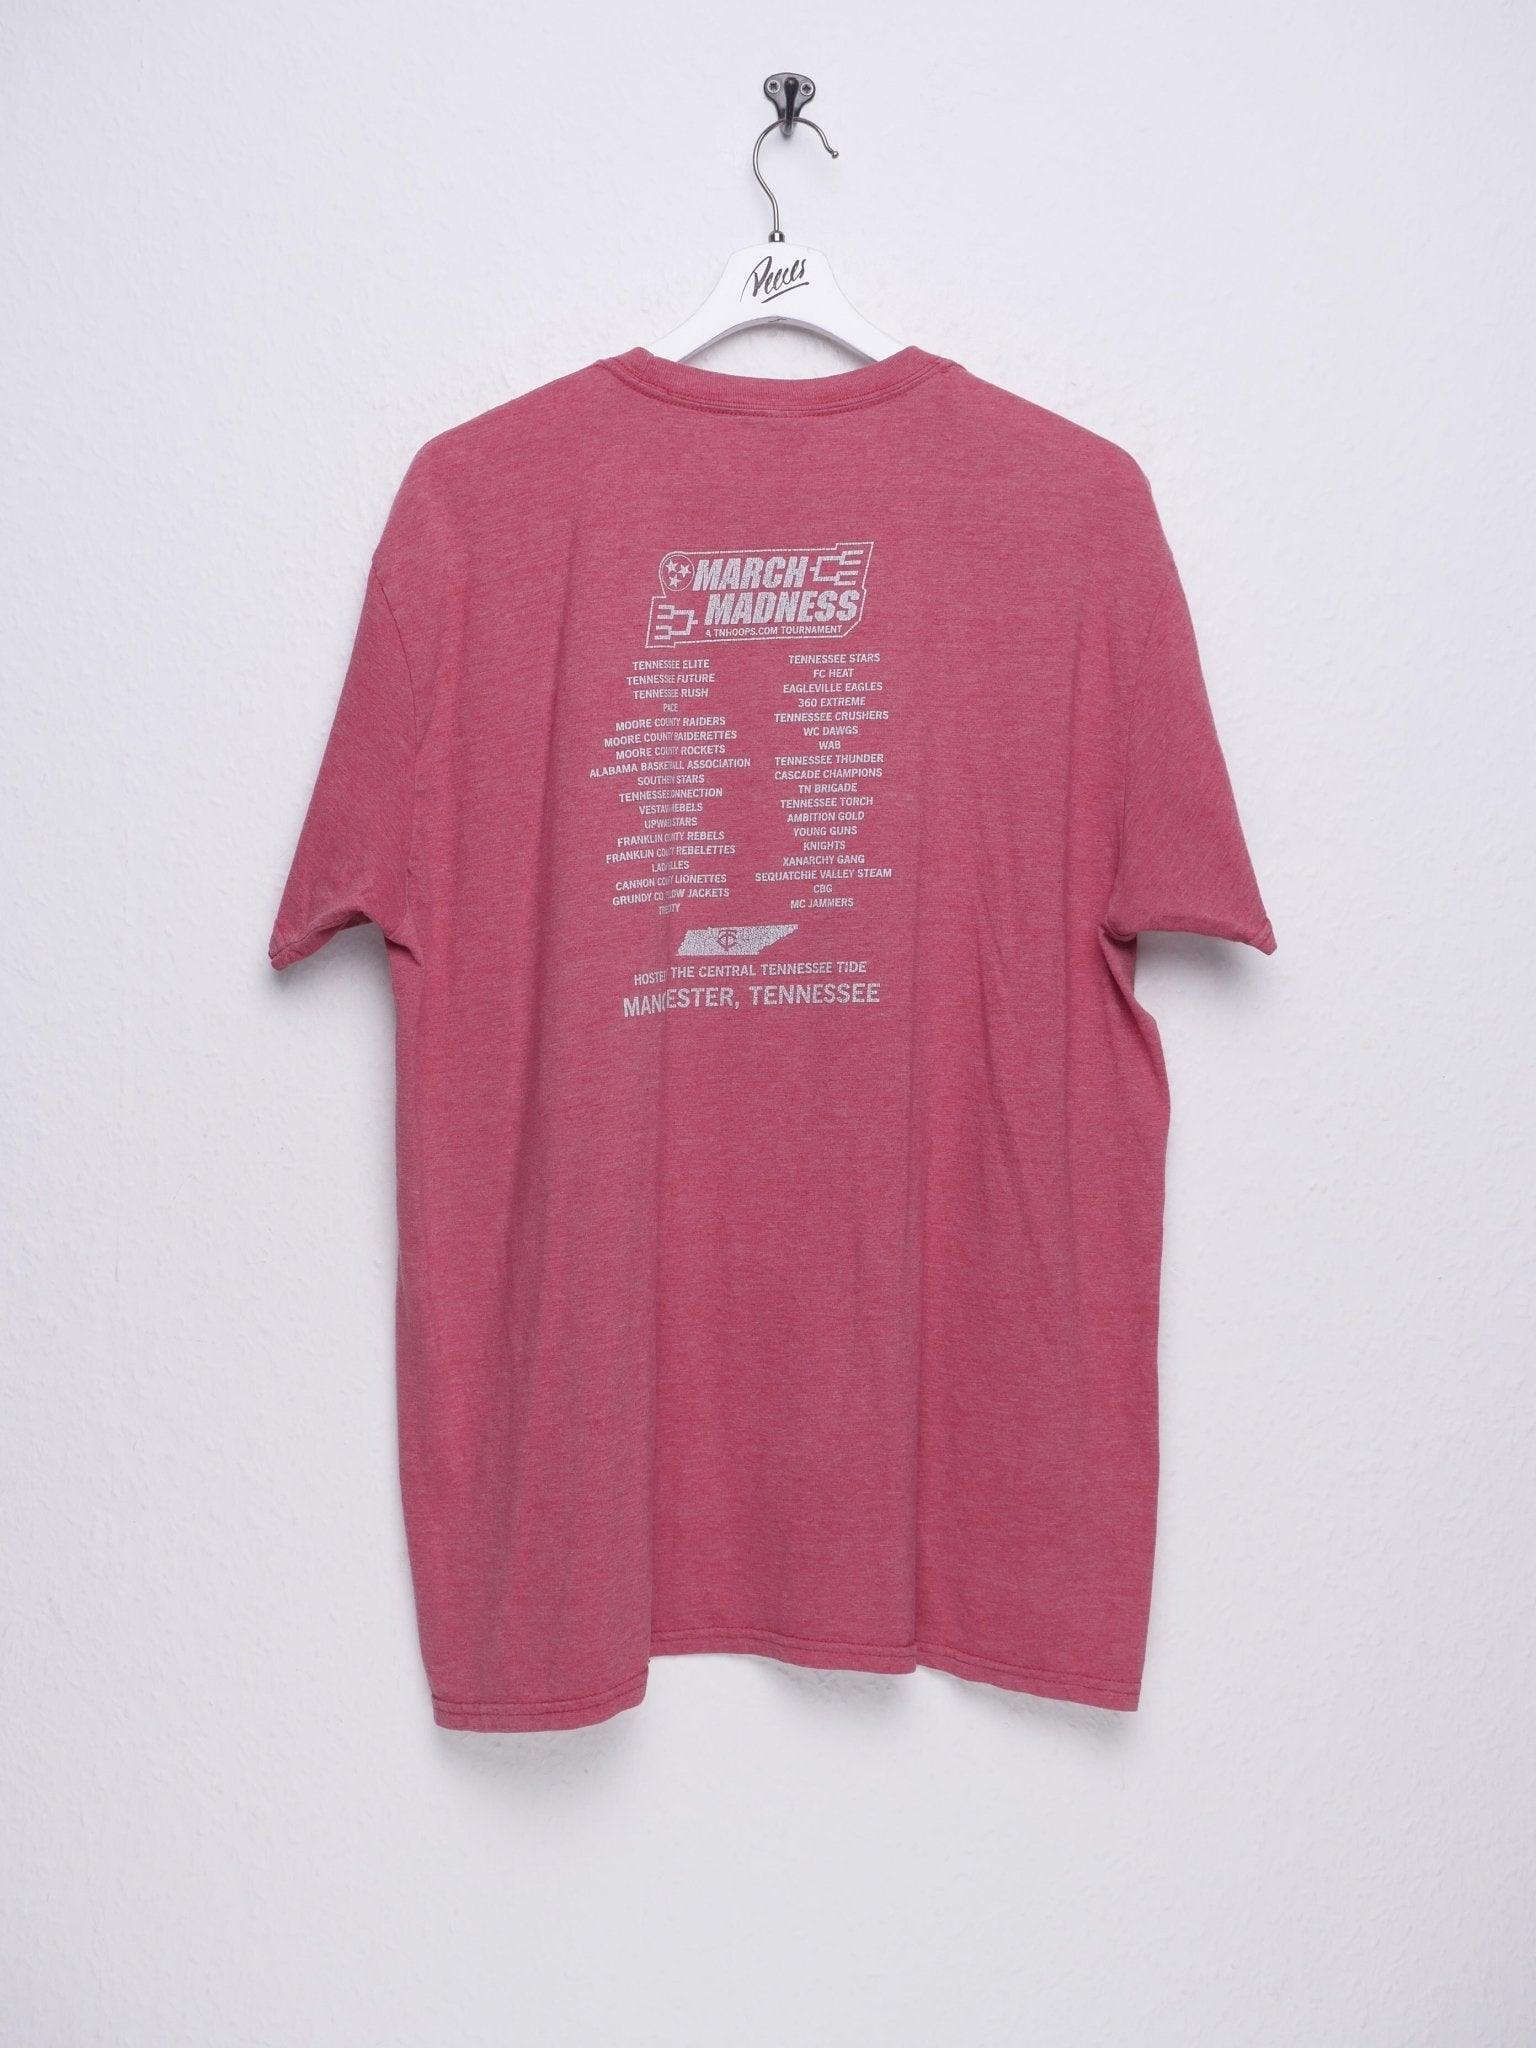 printed Graphic pink Shirt - Peeces